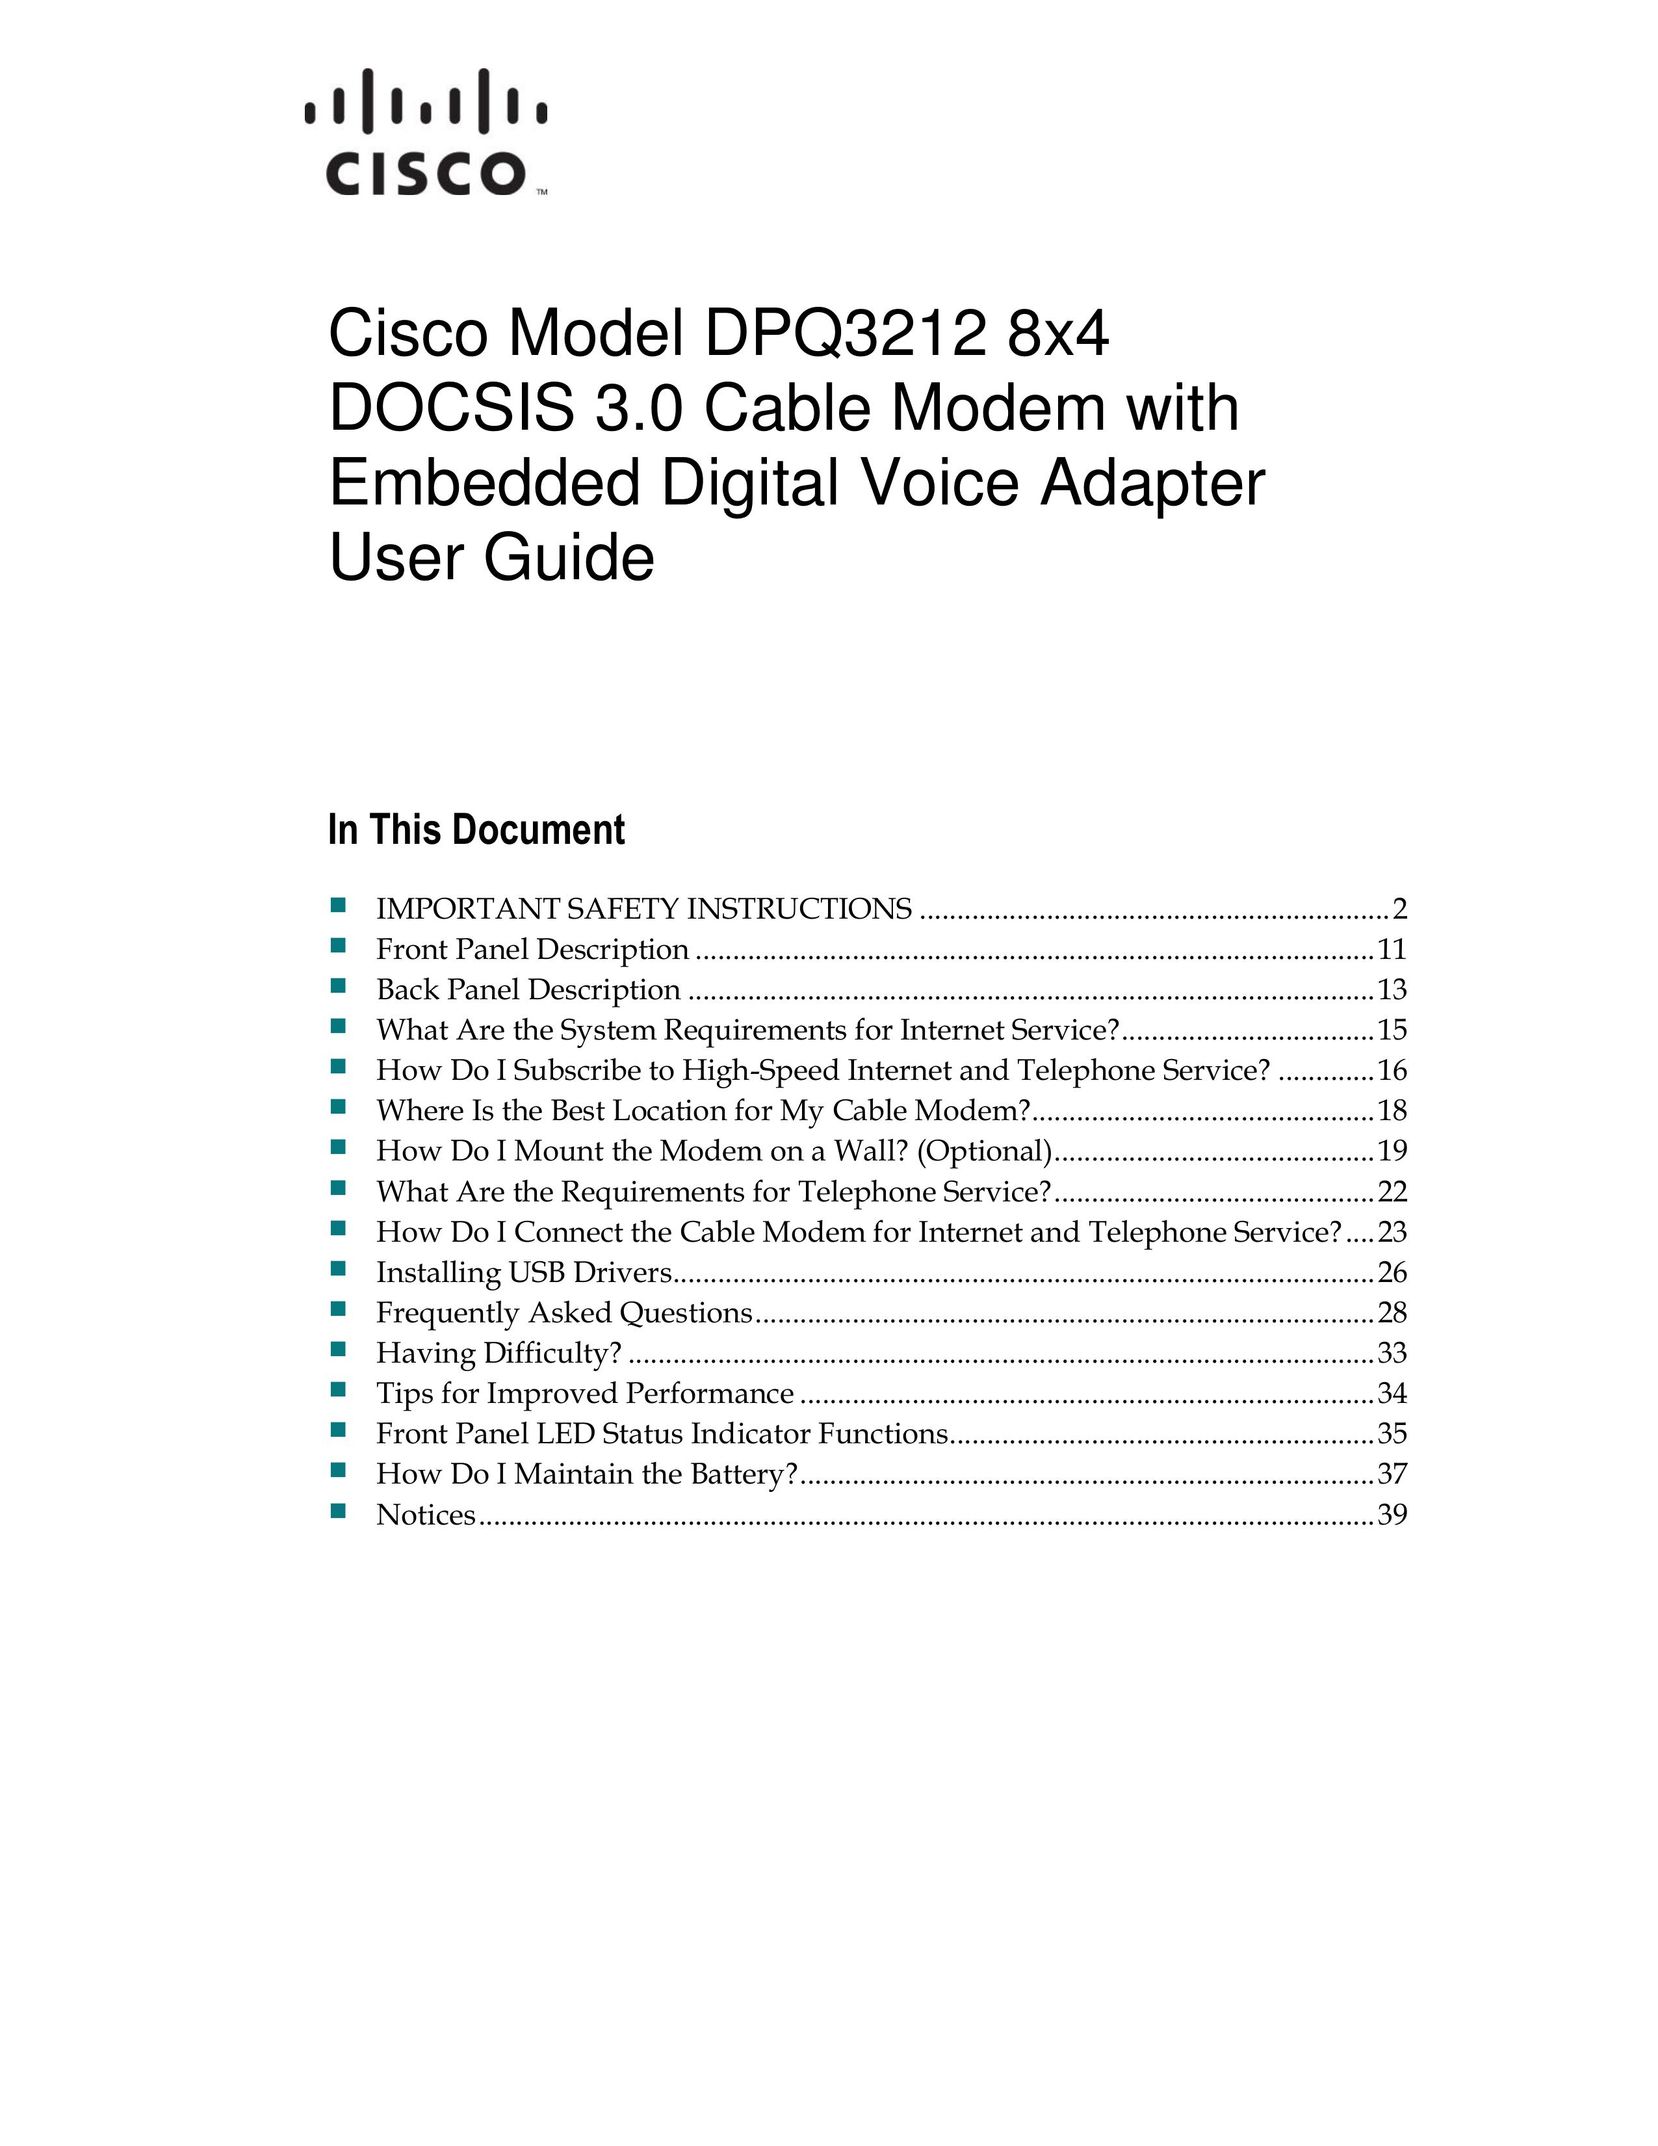 Cisco Systems DPQ3212 Modem User Manual